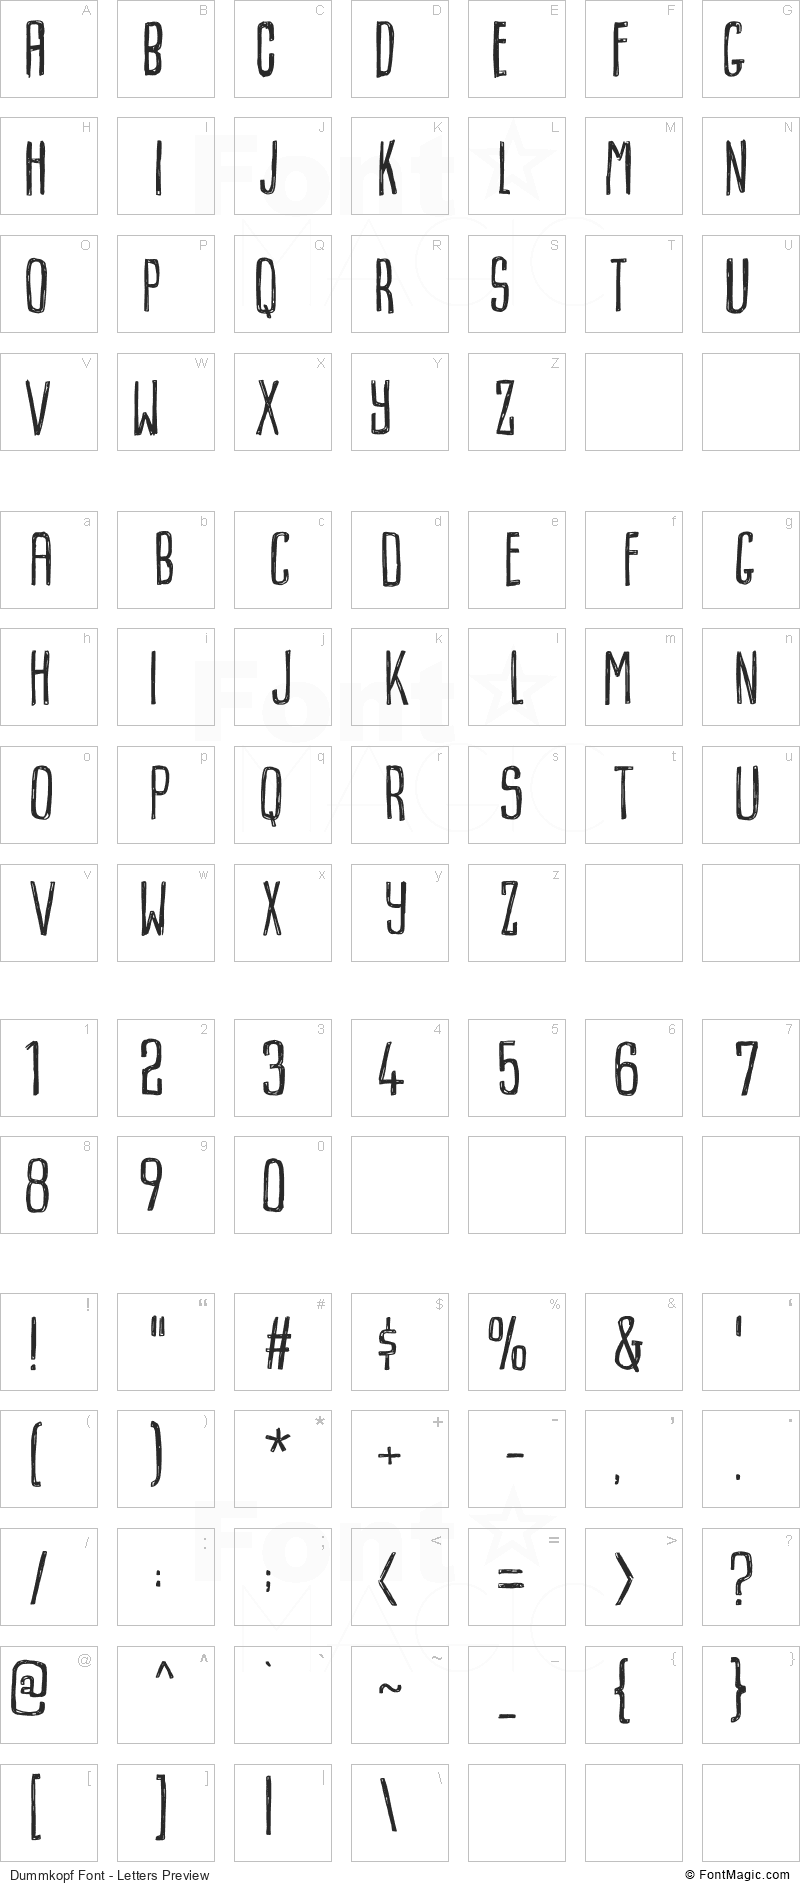 Dummkopf Font - All Latters Preview Chart